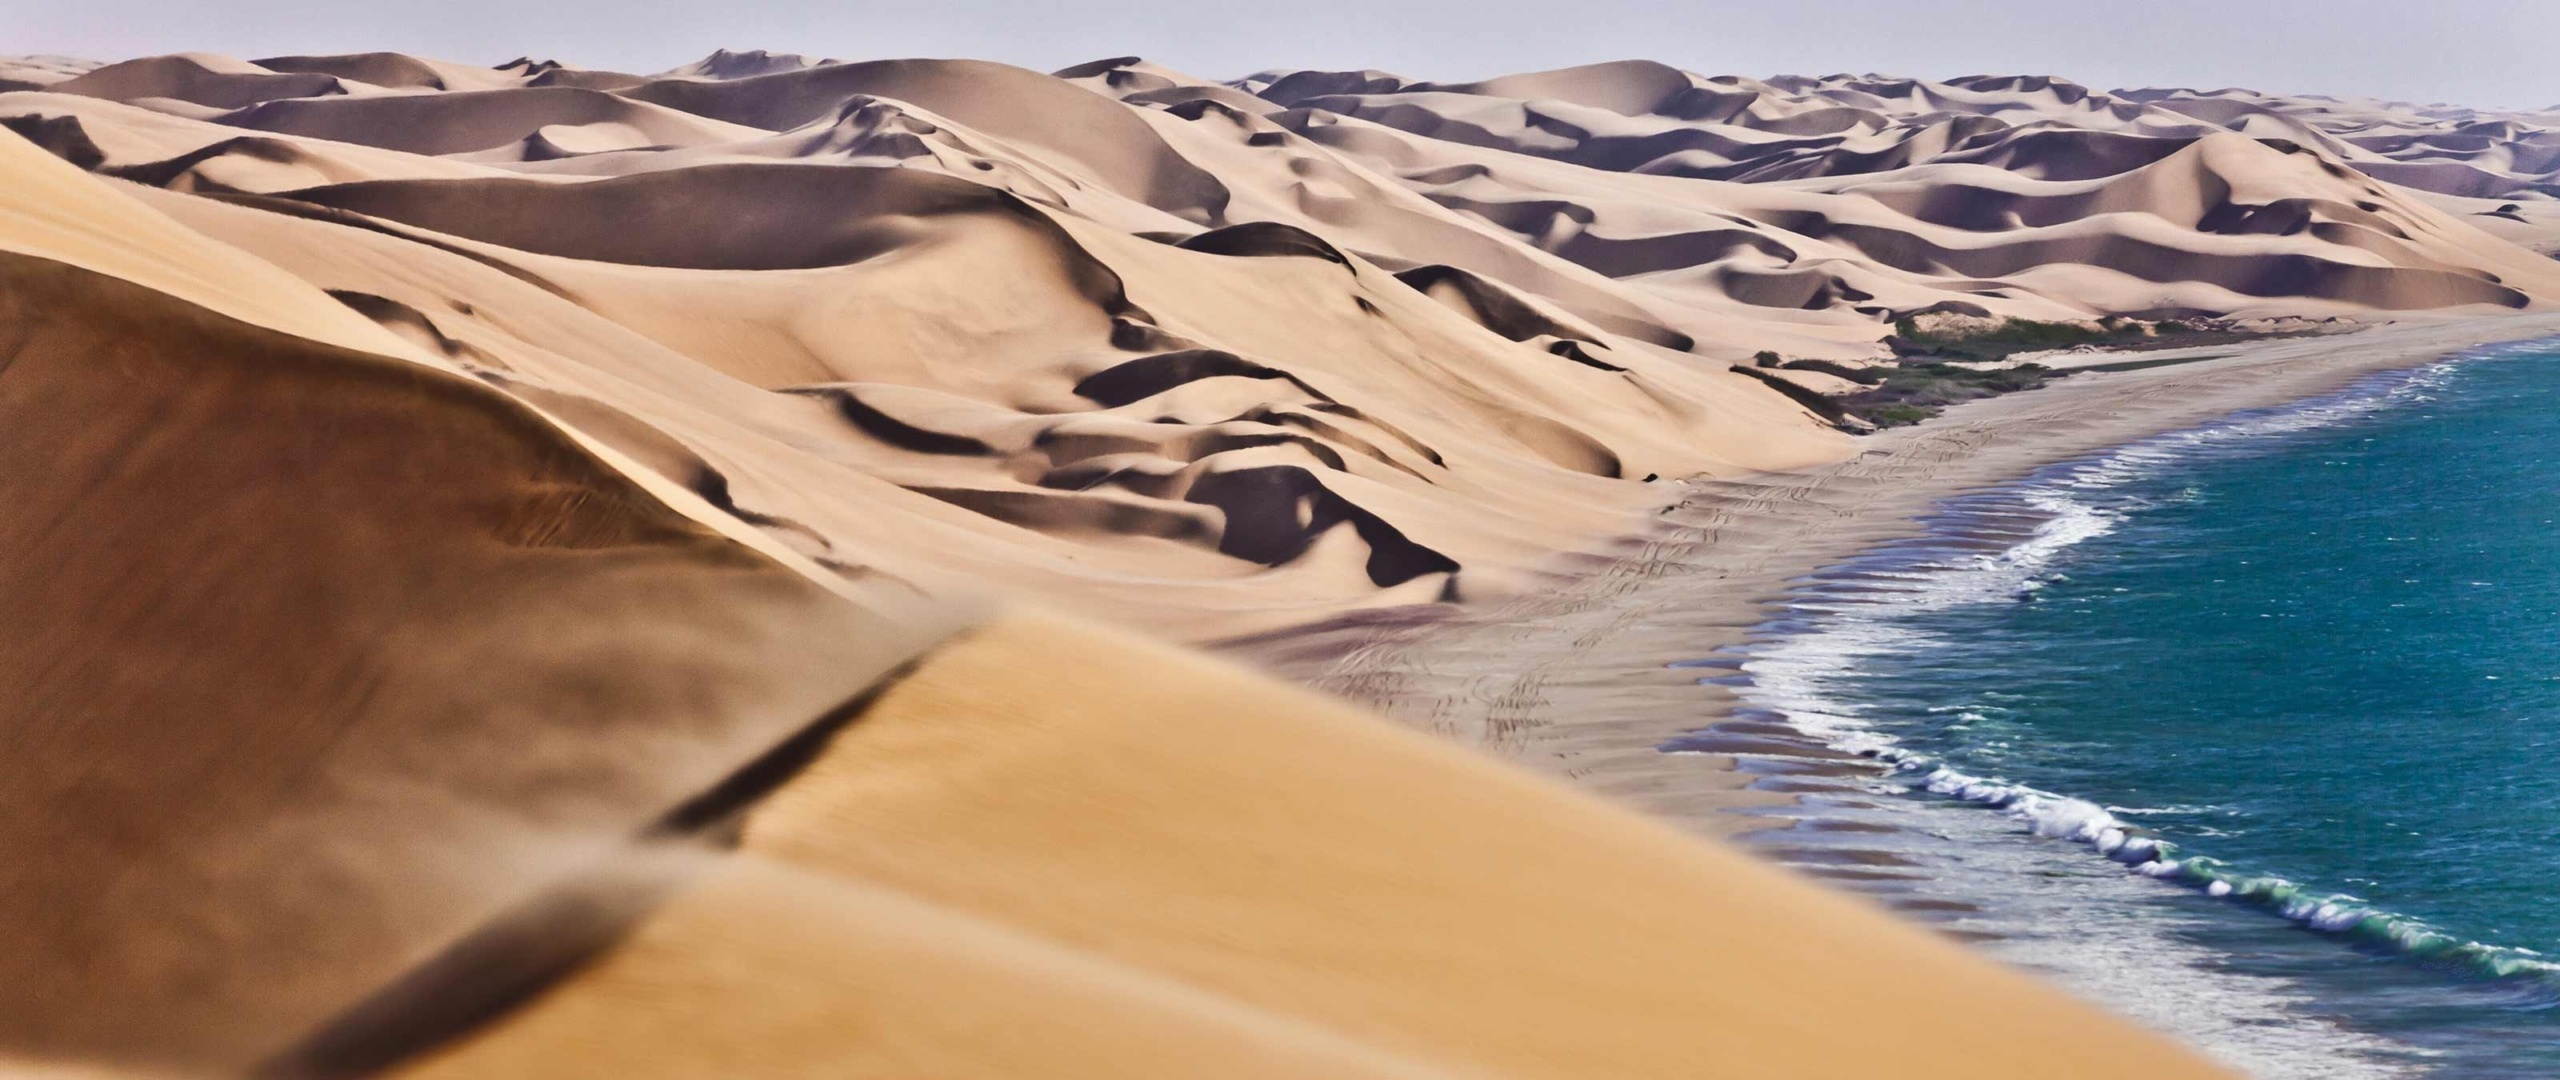 Namibia trekking, Desert wanderlust, Namib desert, Coastal oasis, 2560x1080 Dual Screen Desktop